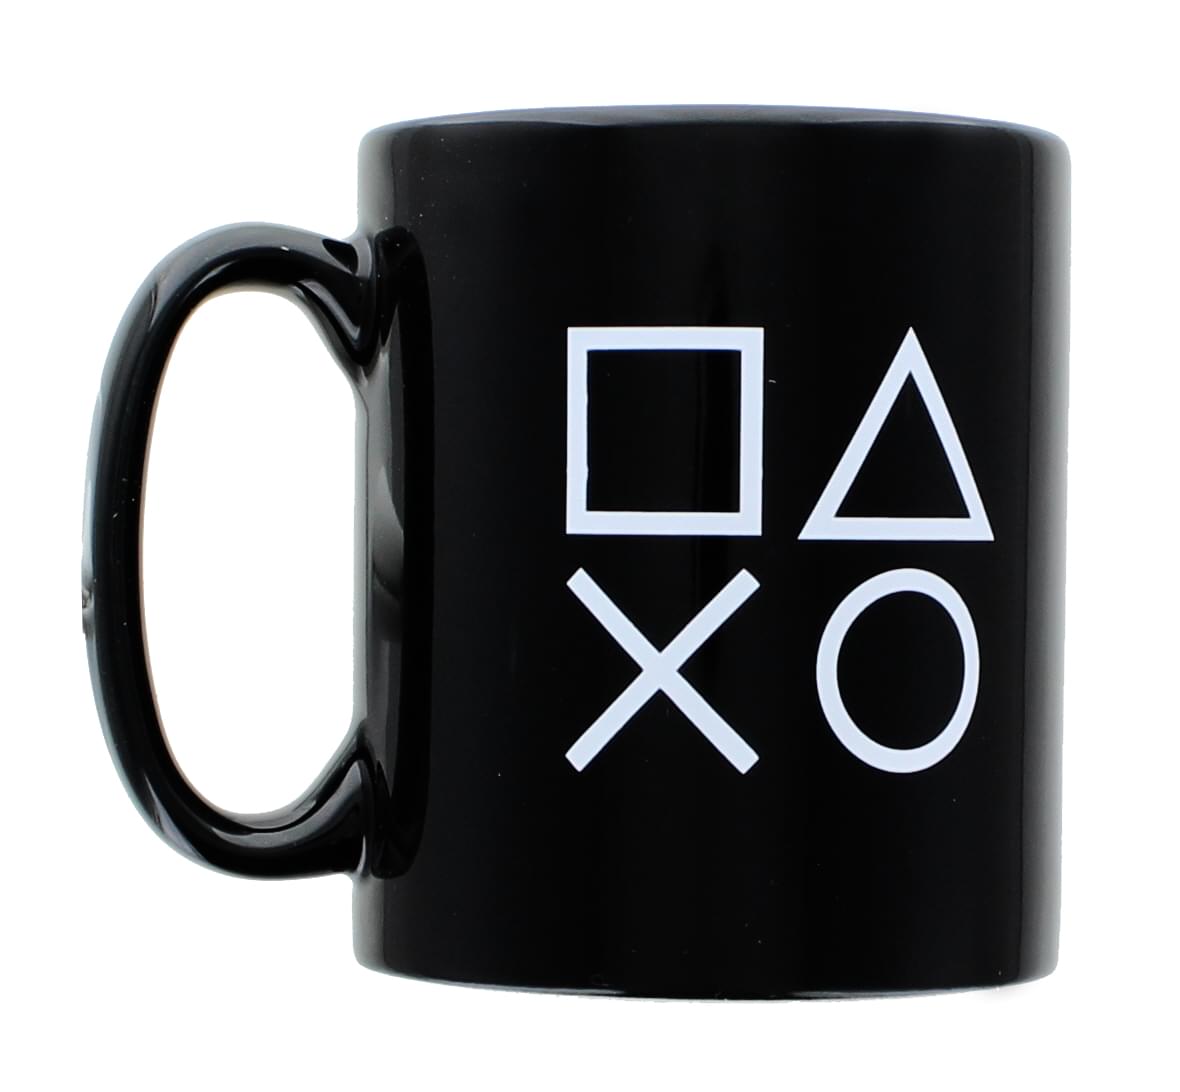 PlayStation Logo and Icons Black Ceramic Coffee Mug - image 1 of 3